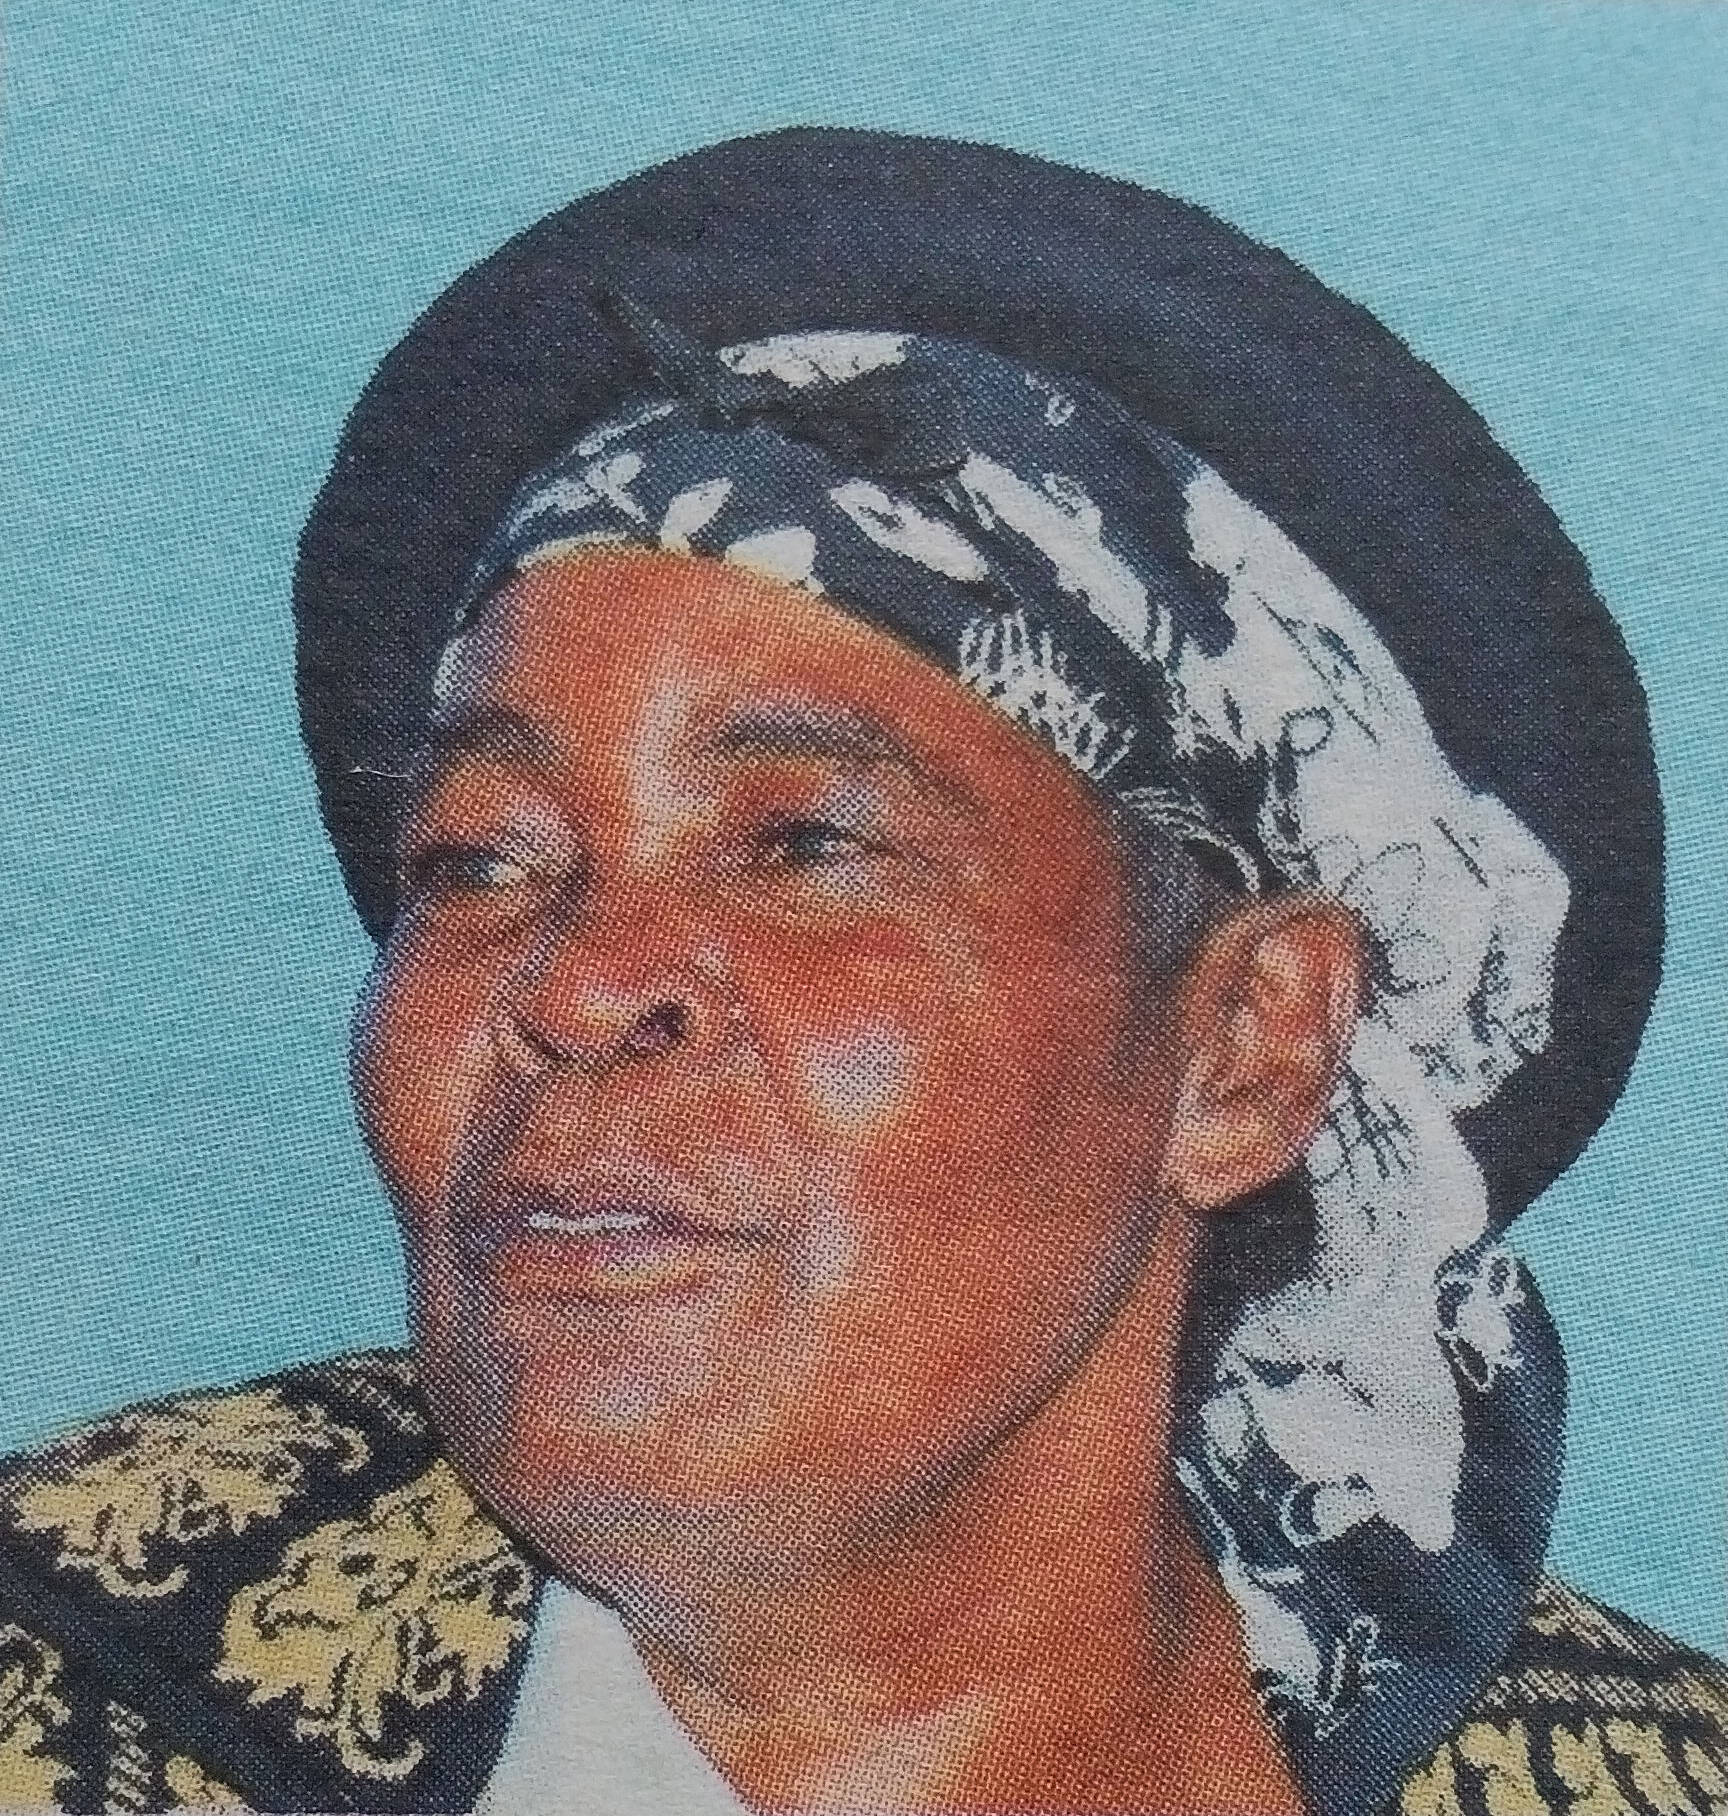 Obituary Image of Mwalimu Petronilla Njoki Gakure Born: 1936 - Died: 24th April 2017